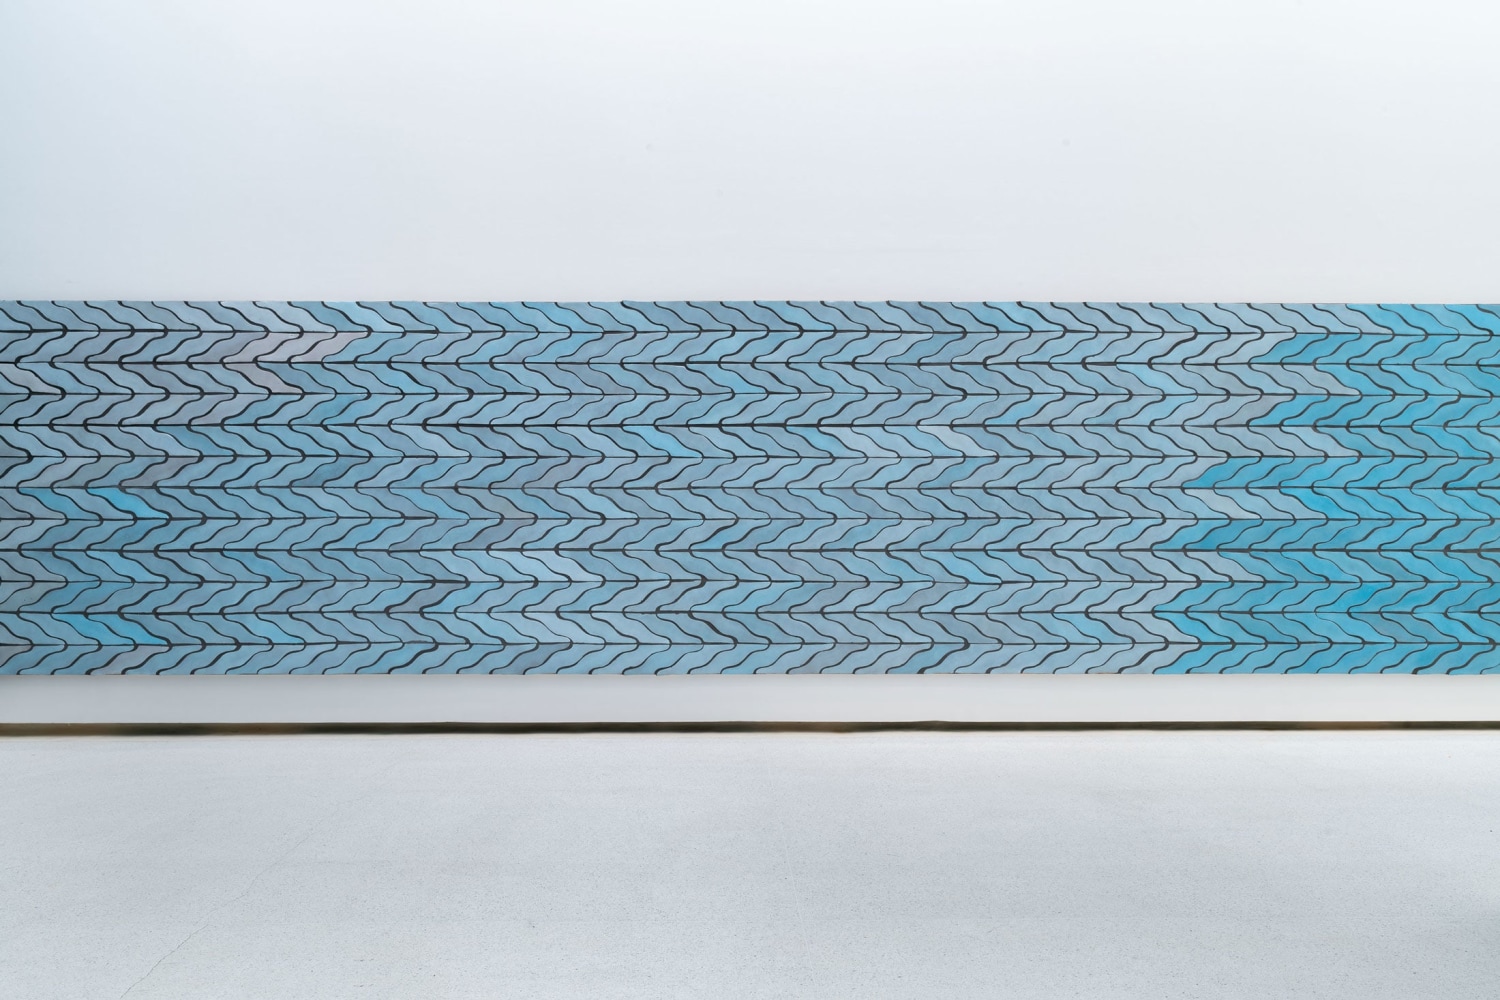 Sarah Crowner
Wall (Wavy Arrow Terracotta), 2018
Glazed terracotta tiles, plywood, aluminum, mortar, grout
Dimensions variable